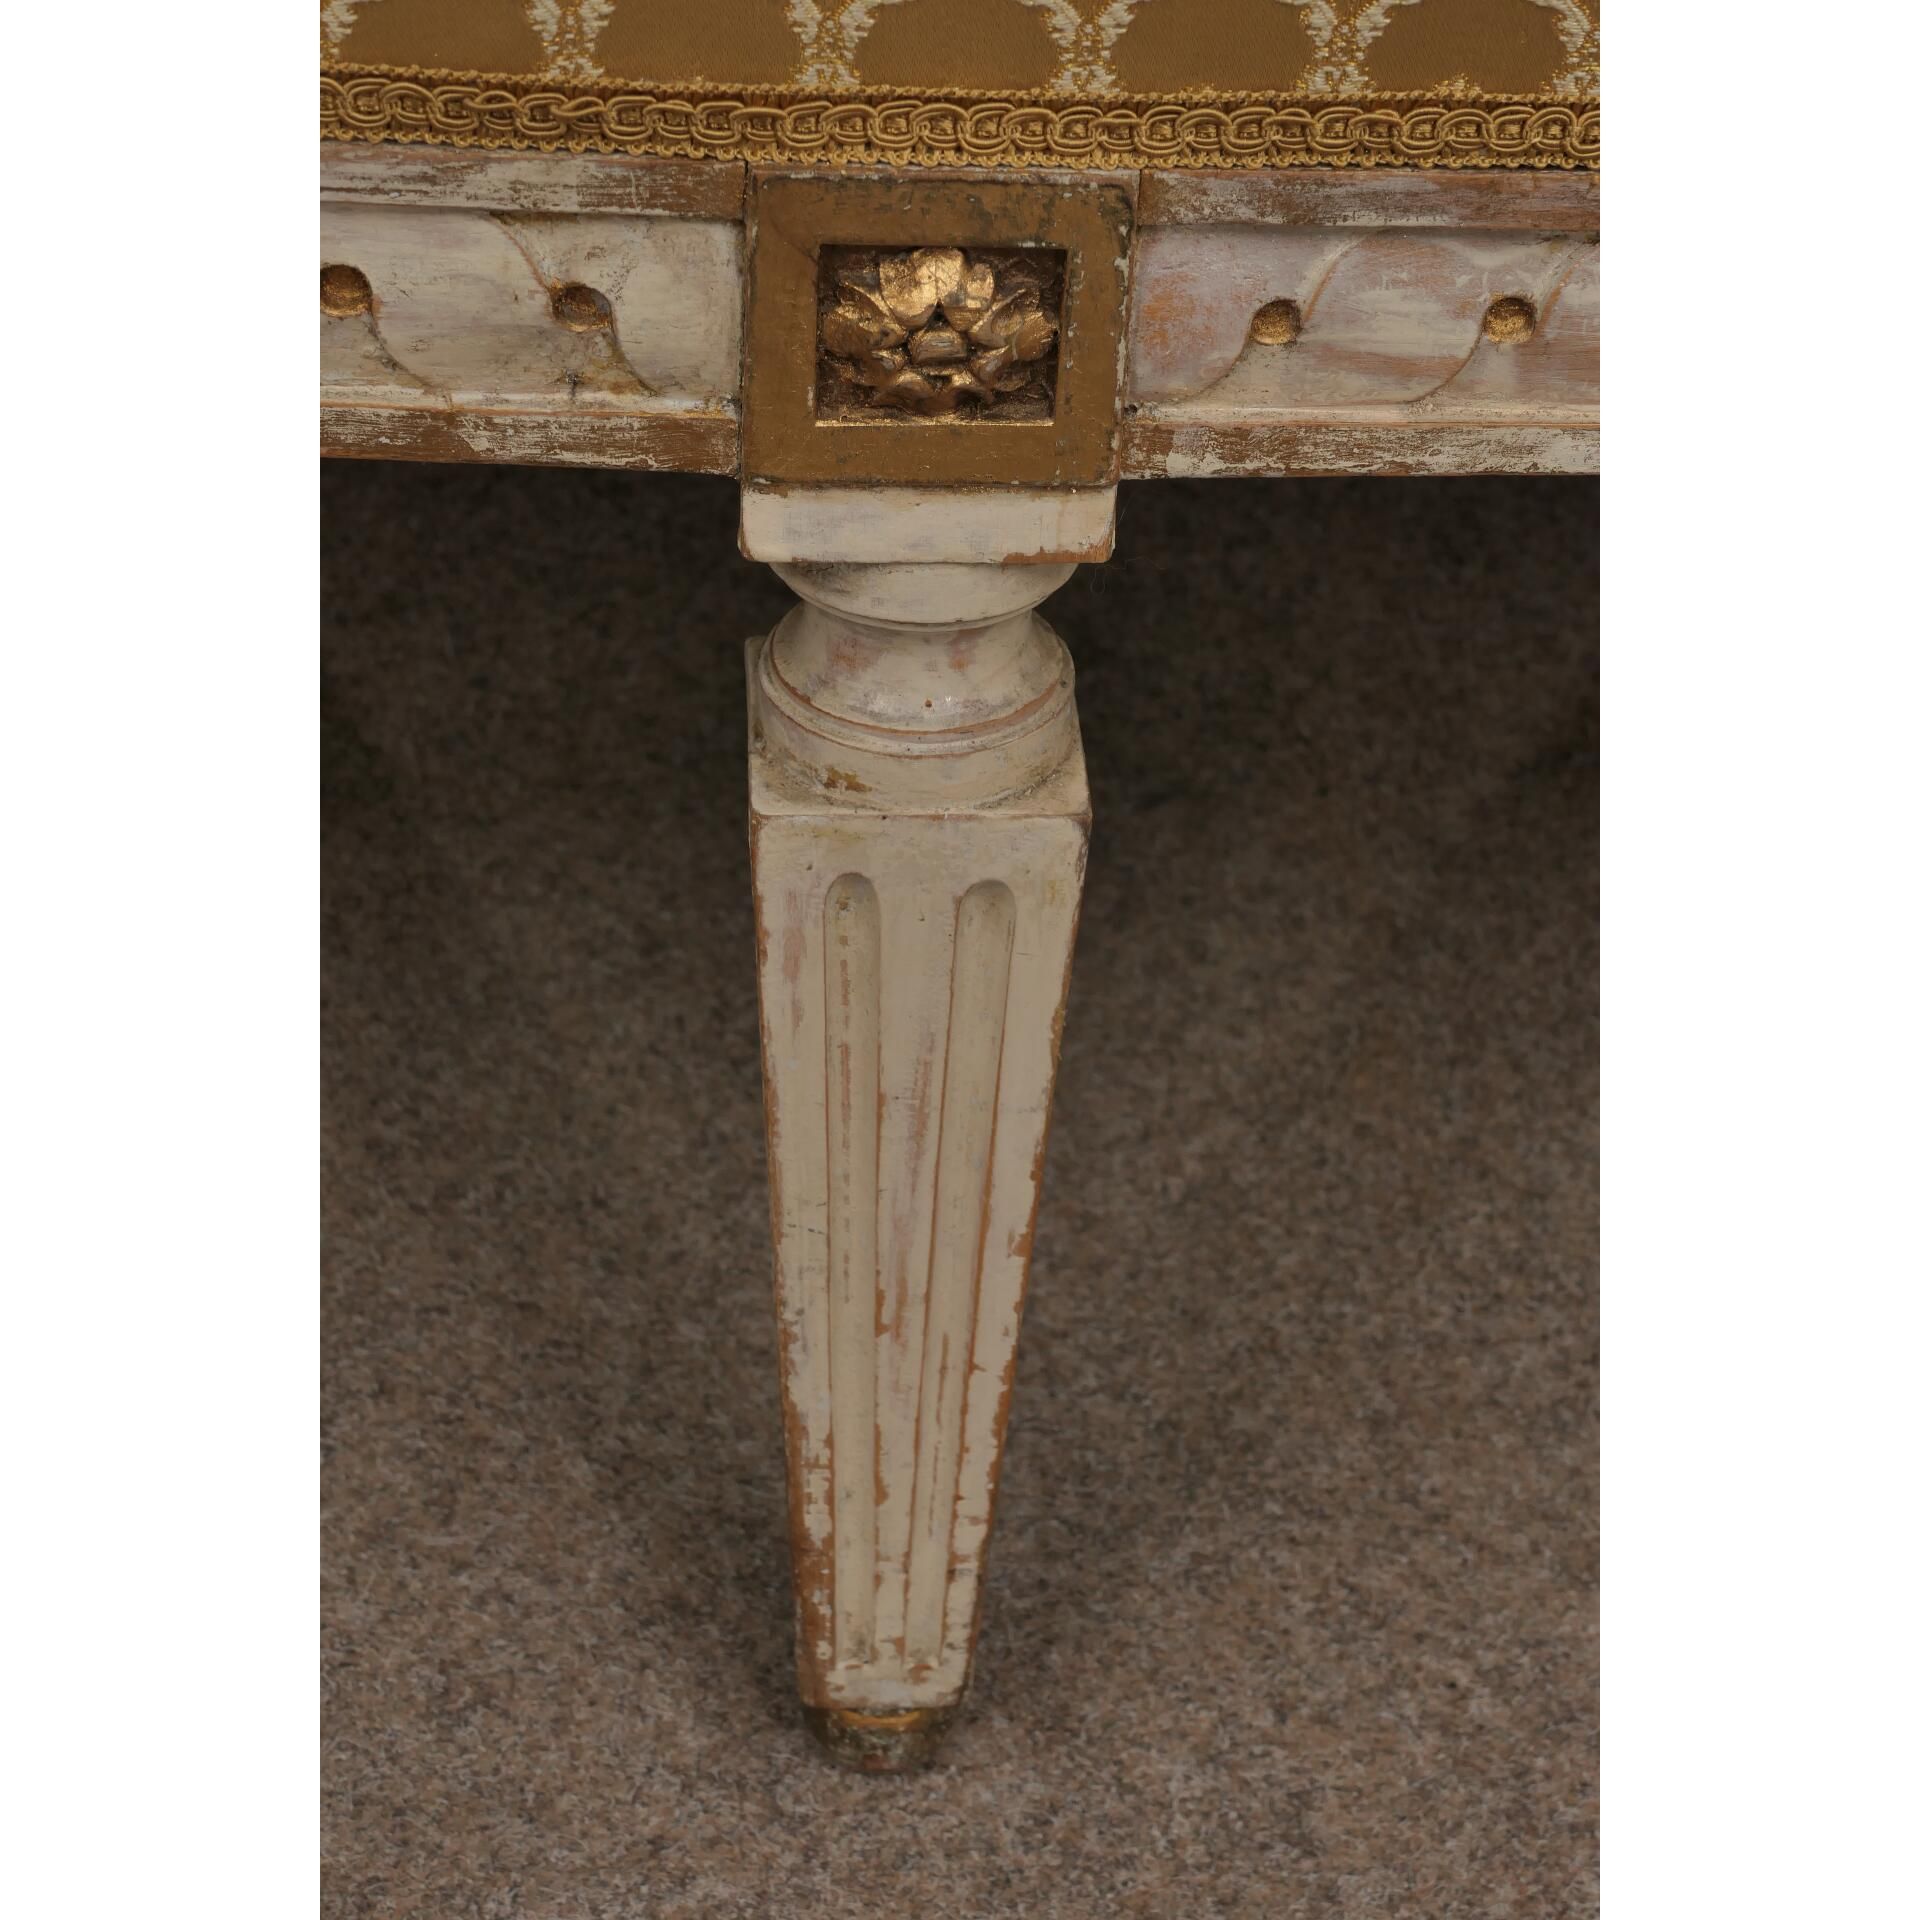 7 tlg. Ameublement, Stil Louis XVI, Ende 19. Jhd., weiß-gold gefasste Hartholzgestelle, intaktes Po - Bild 8 aus 9